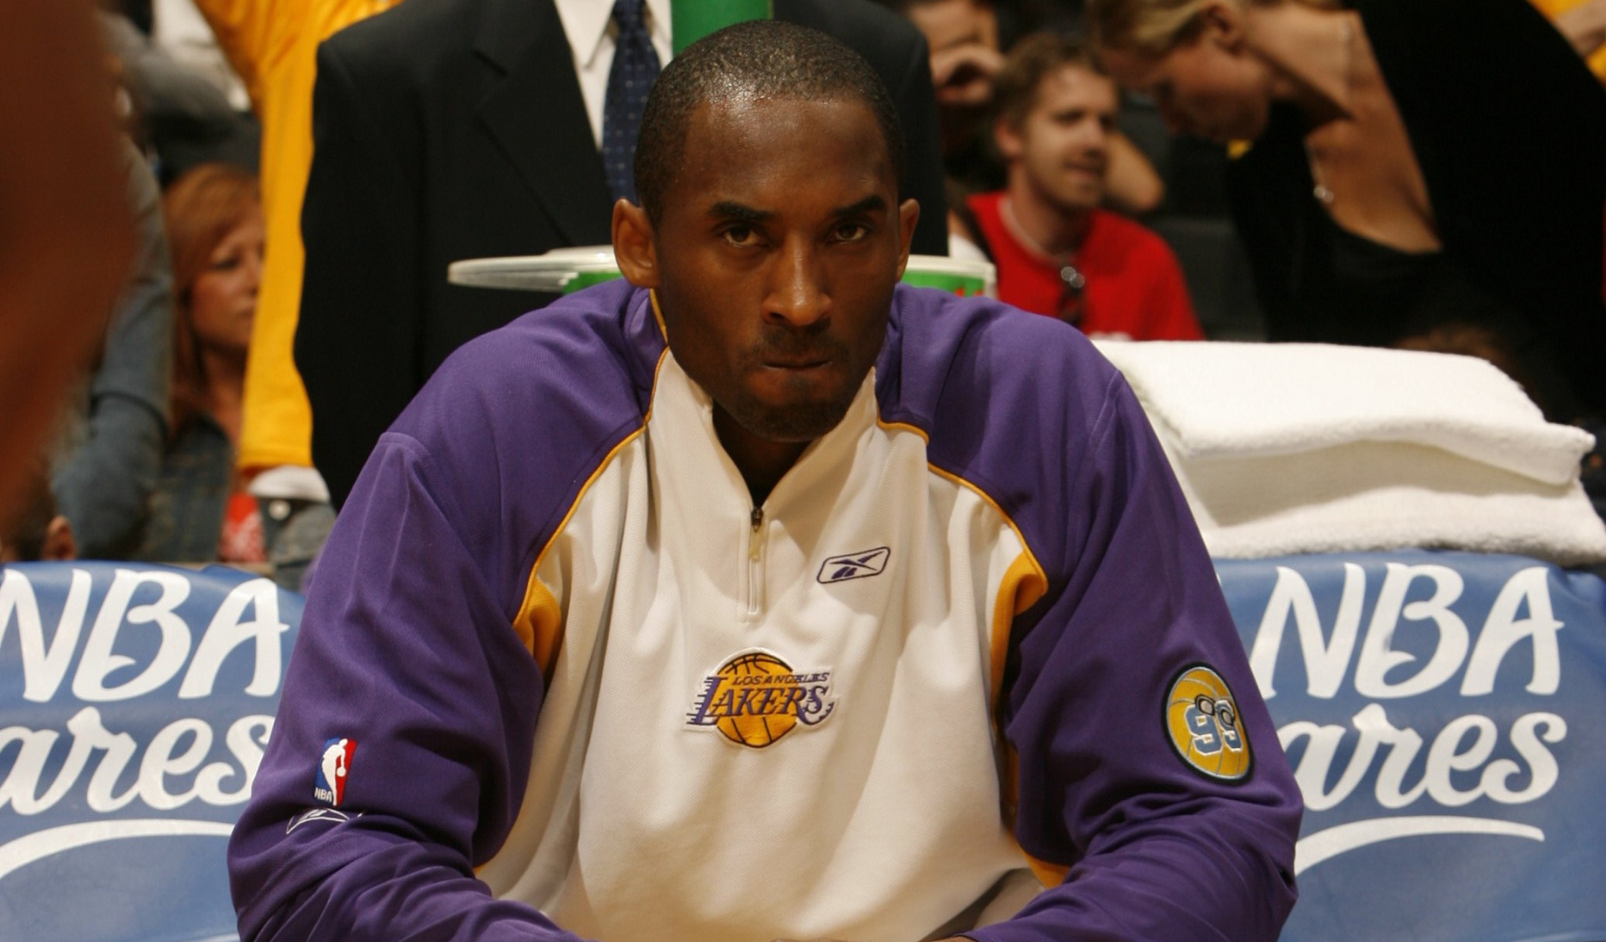 Rare Adidas NBA Los Angeles Lakers Kobe Bryant 81 Point